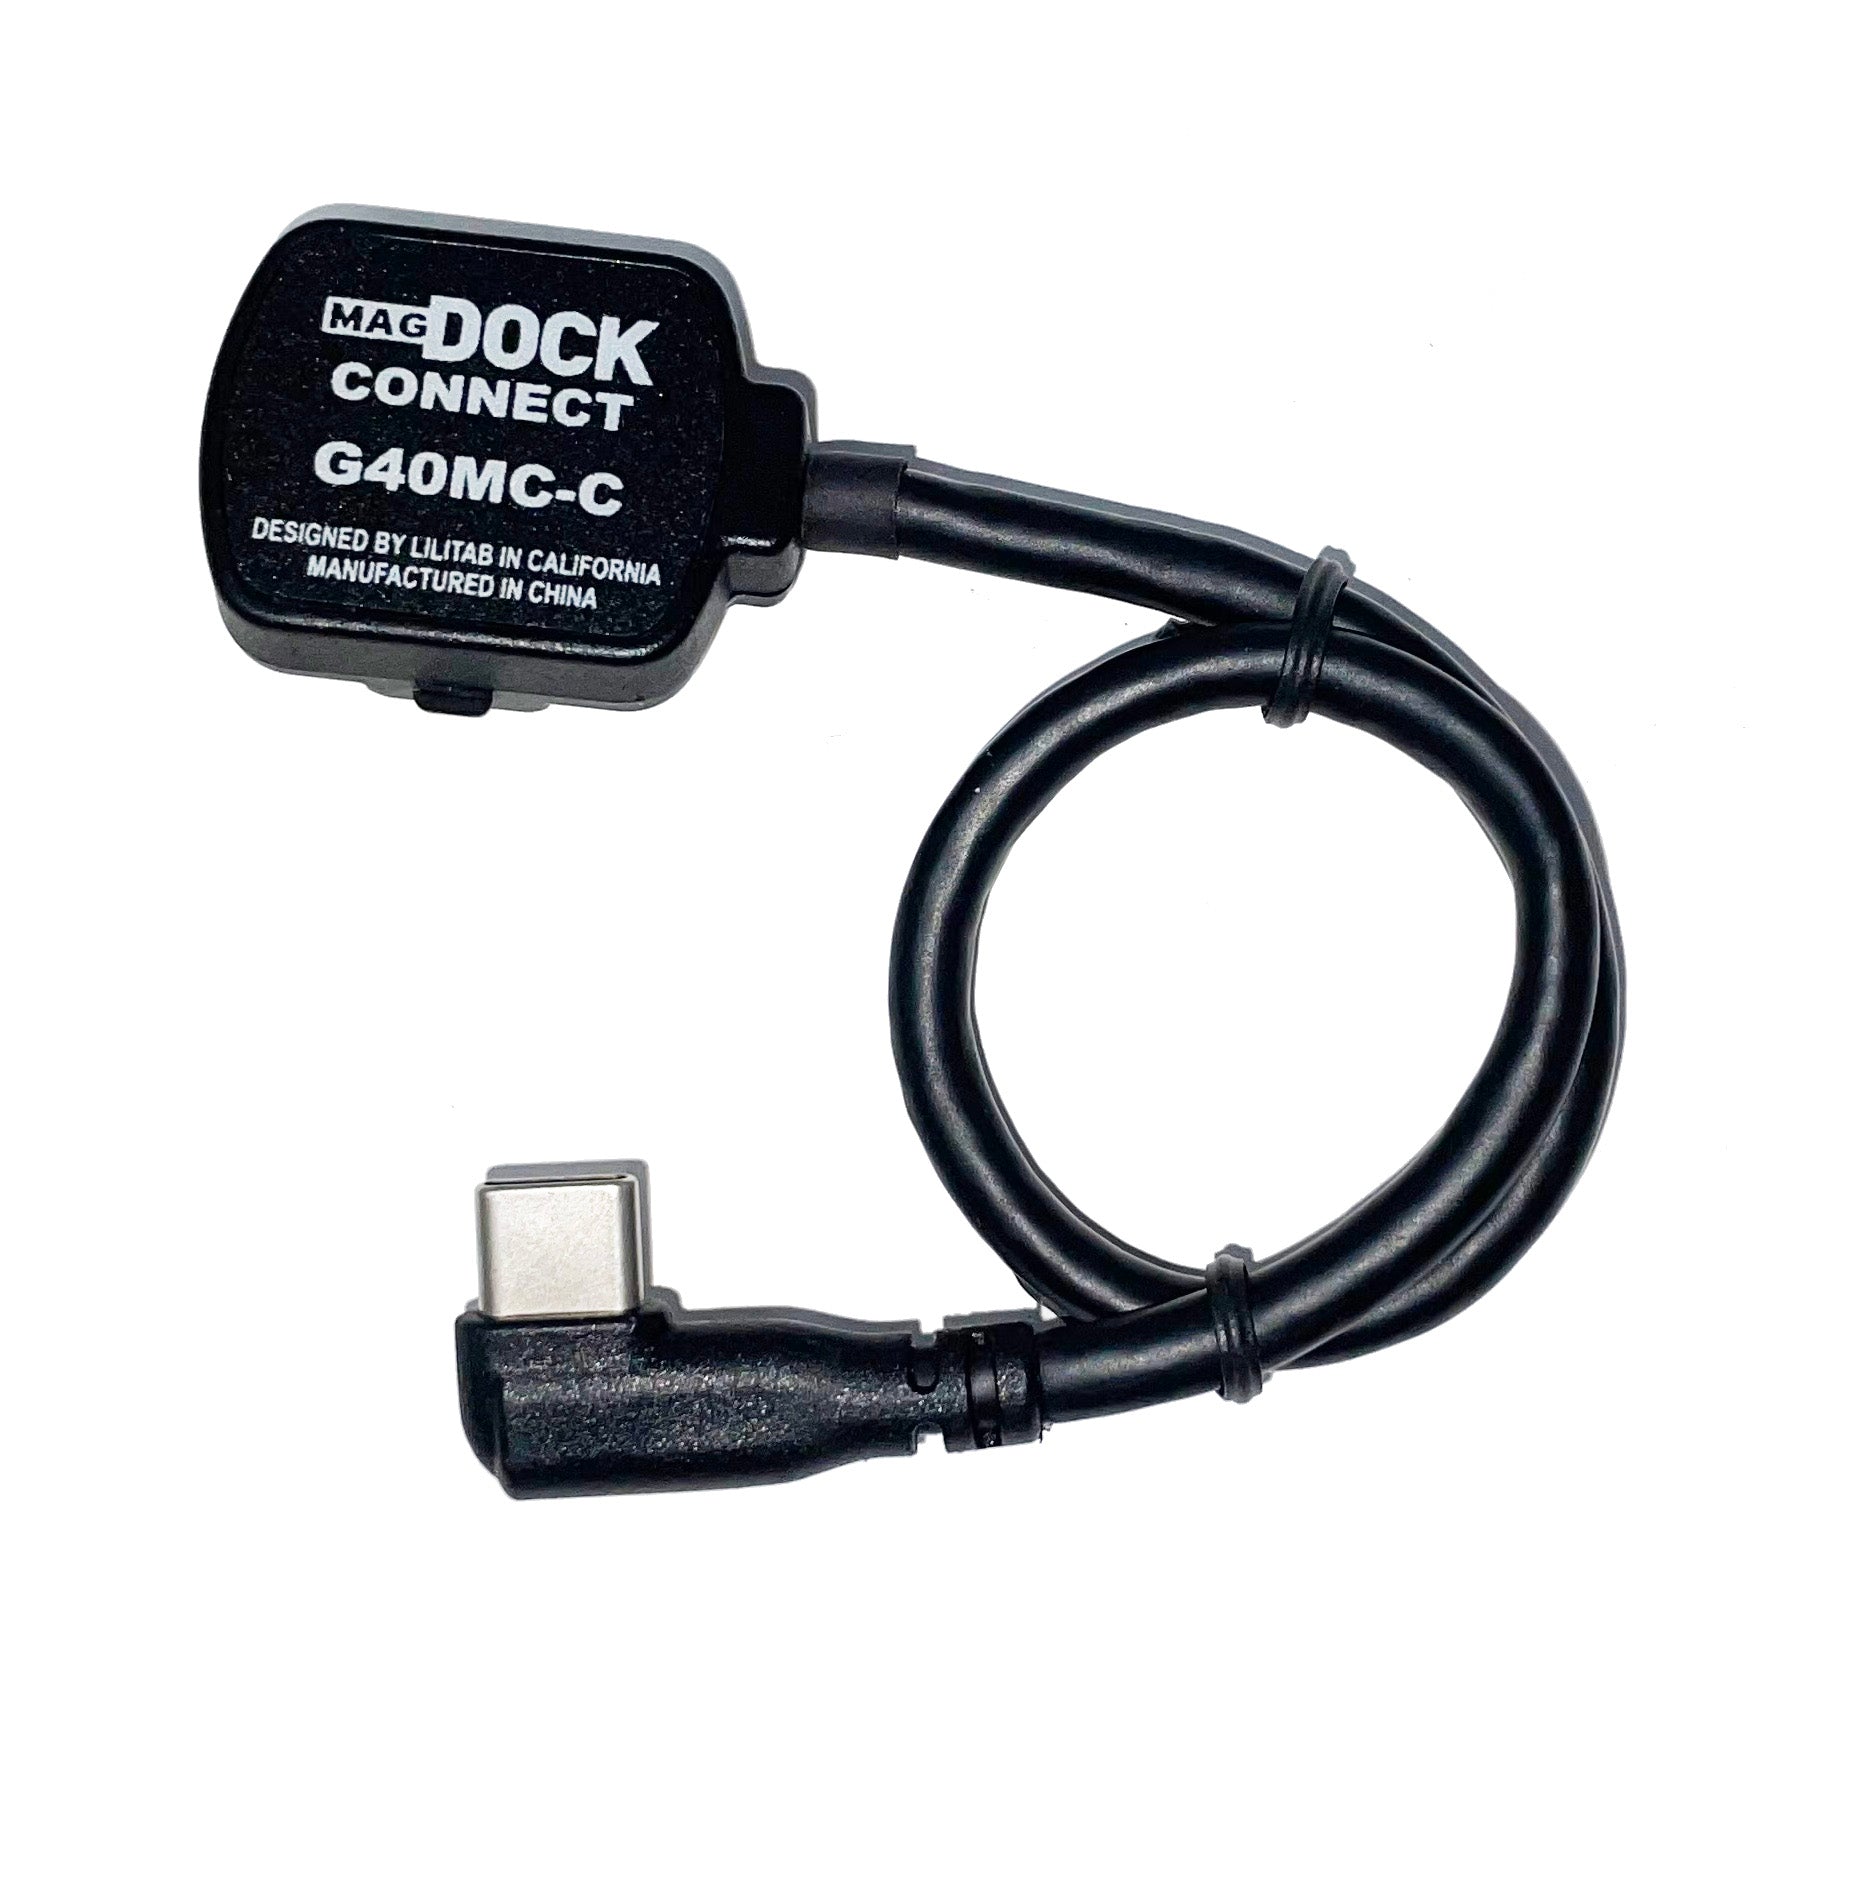 Lilitab Magdock Connect internal usb-c cable